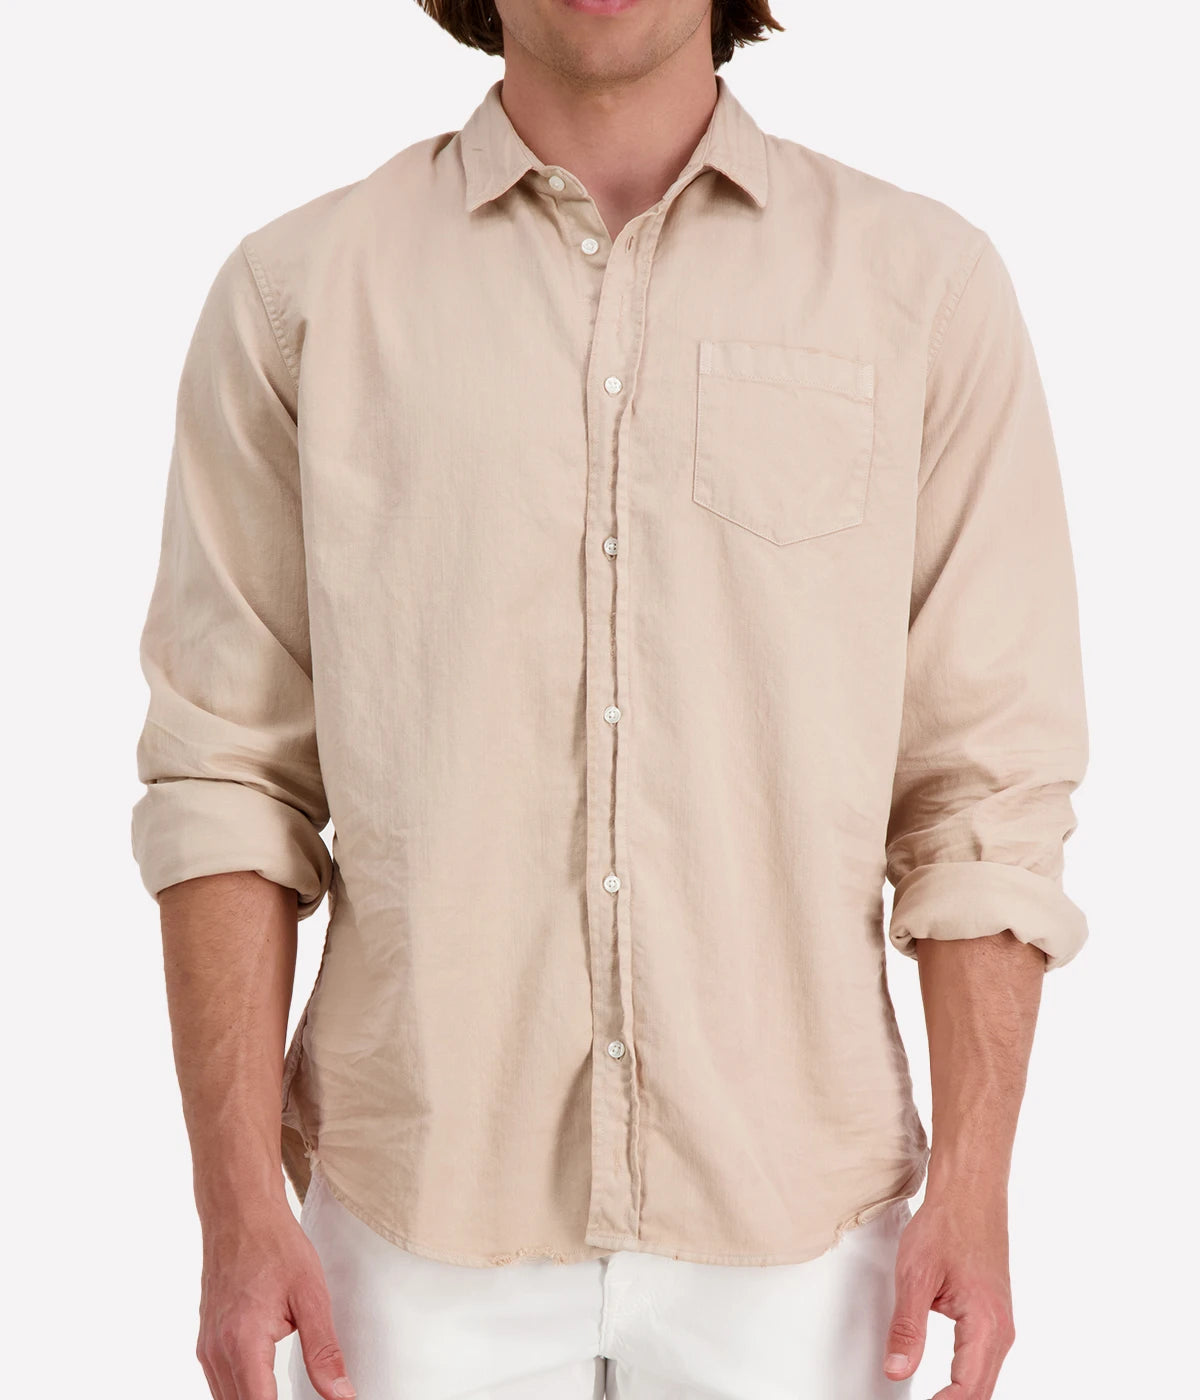 Luke Woven Button Up Shirt in Sand & Indigo